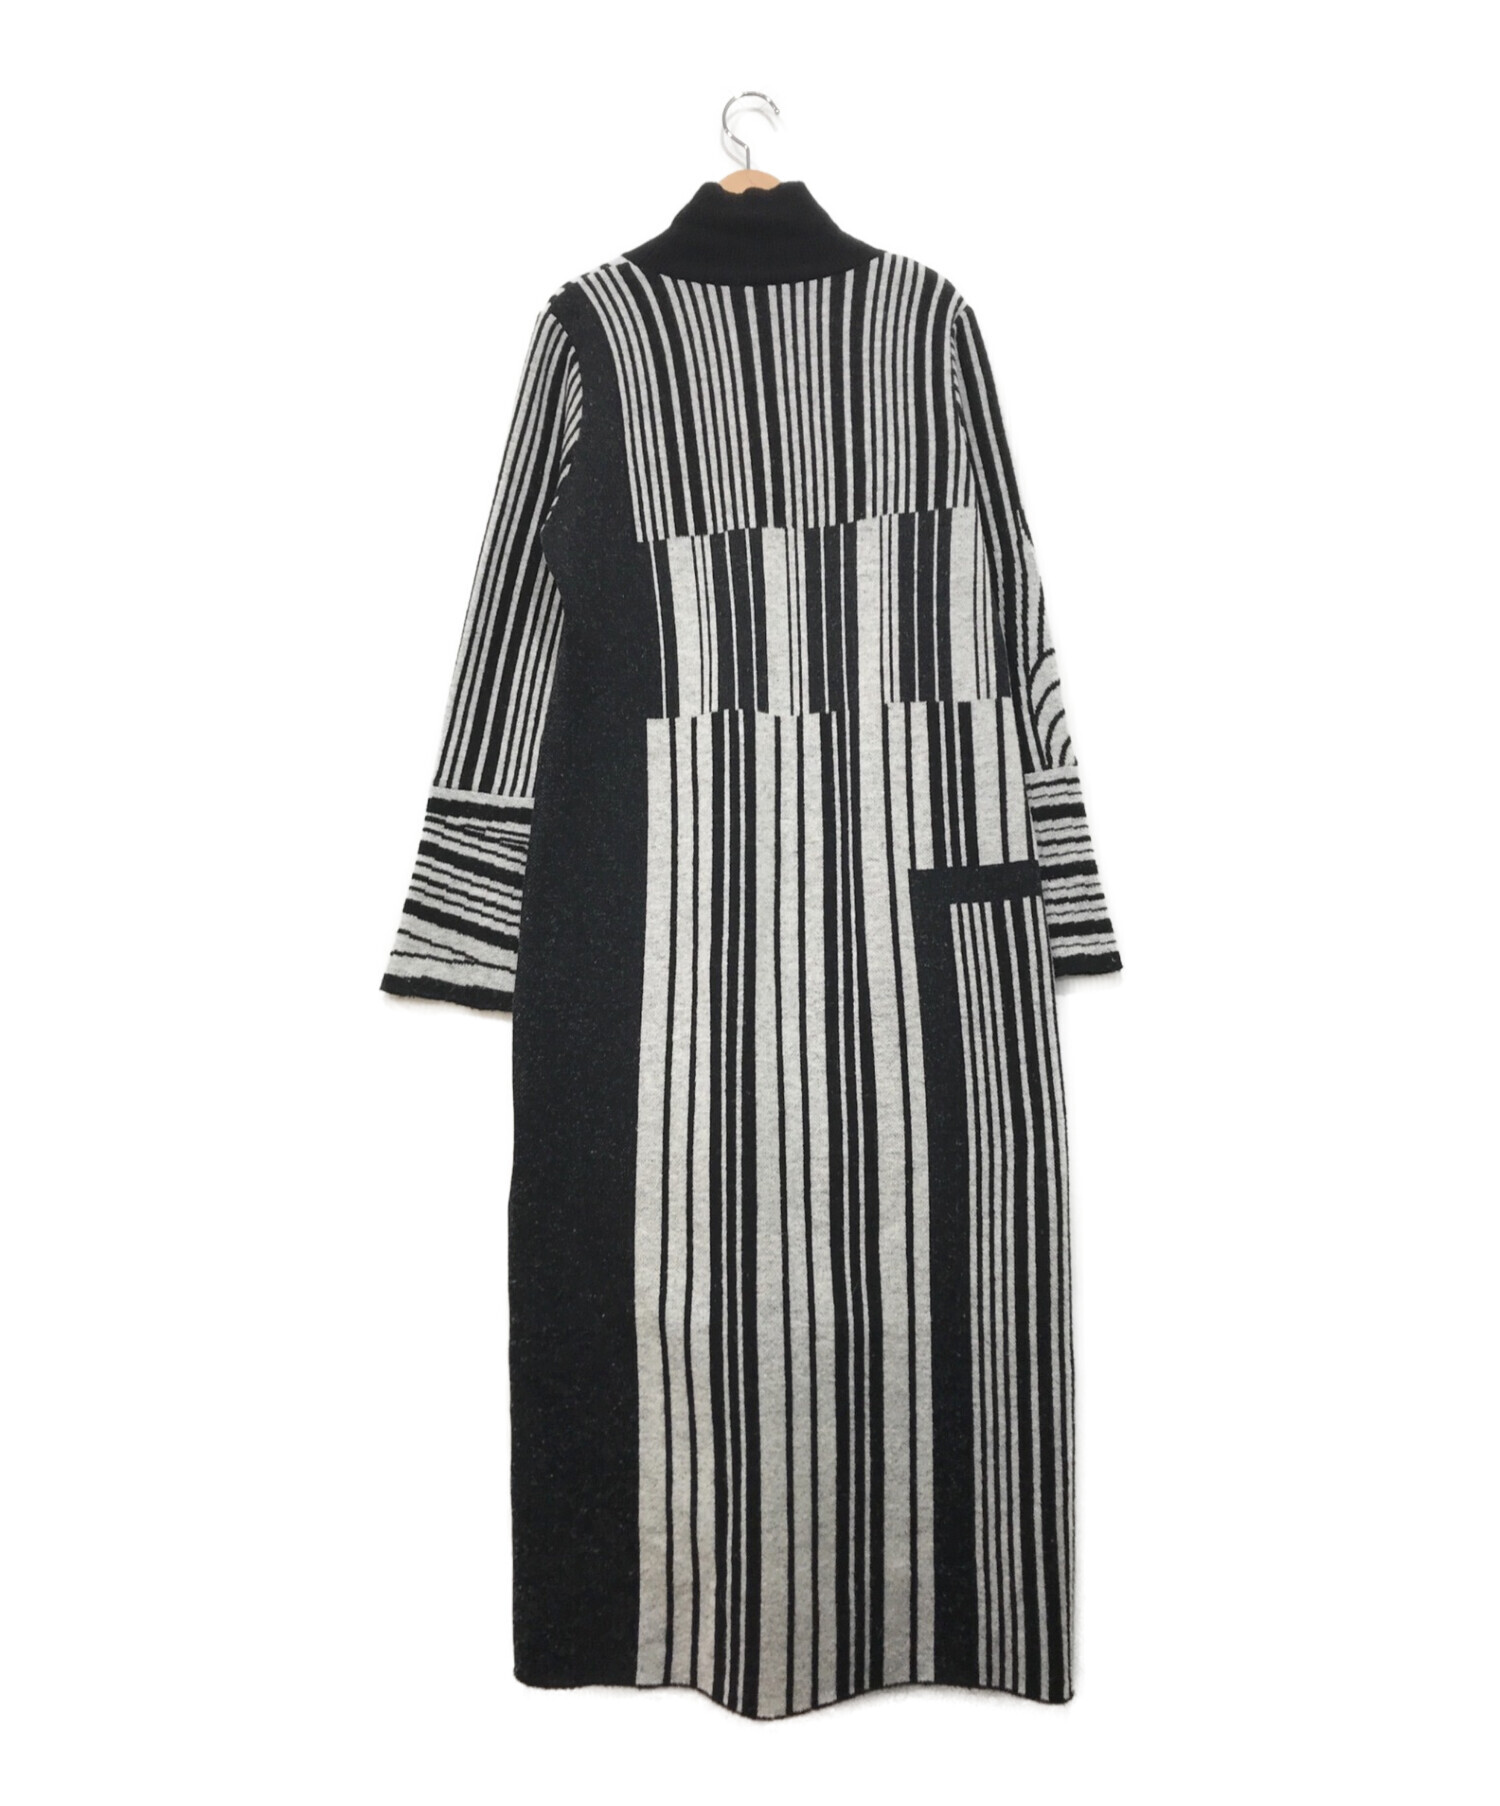 Mame Kurogouchi (マメクロゴウチ) Multi-Stripe Jacquard Knitted Dress ホワイト×ブラック  サイズ:2